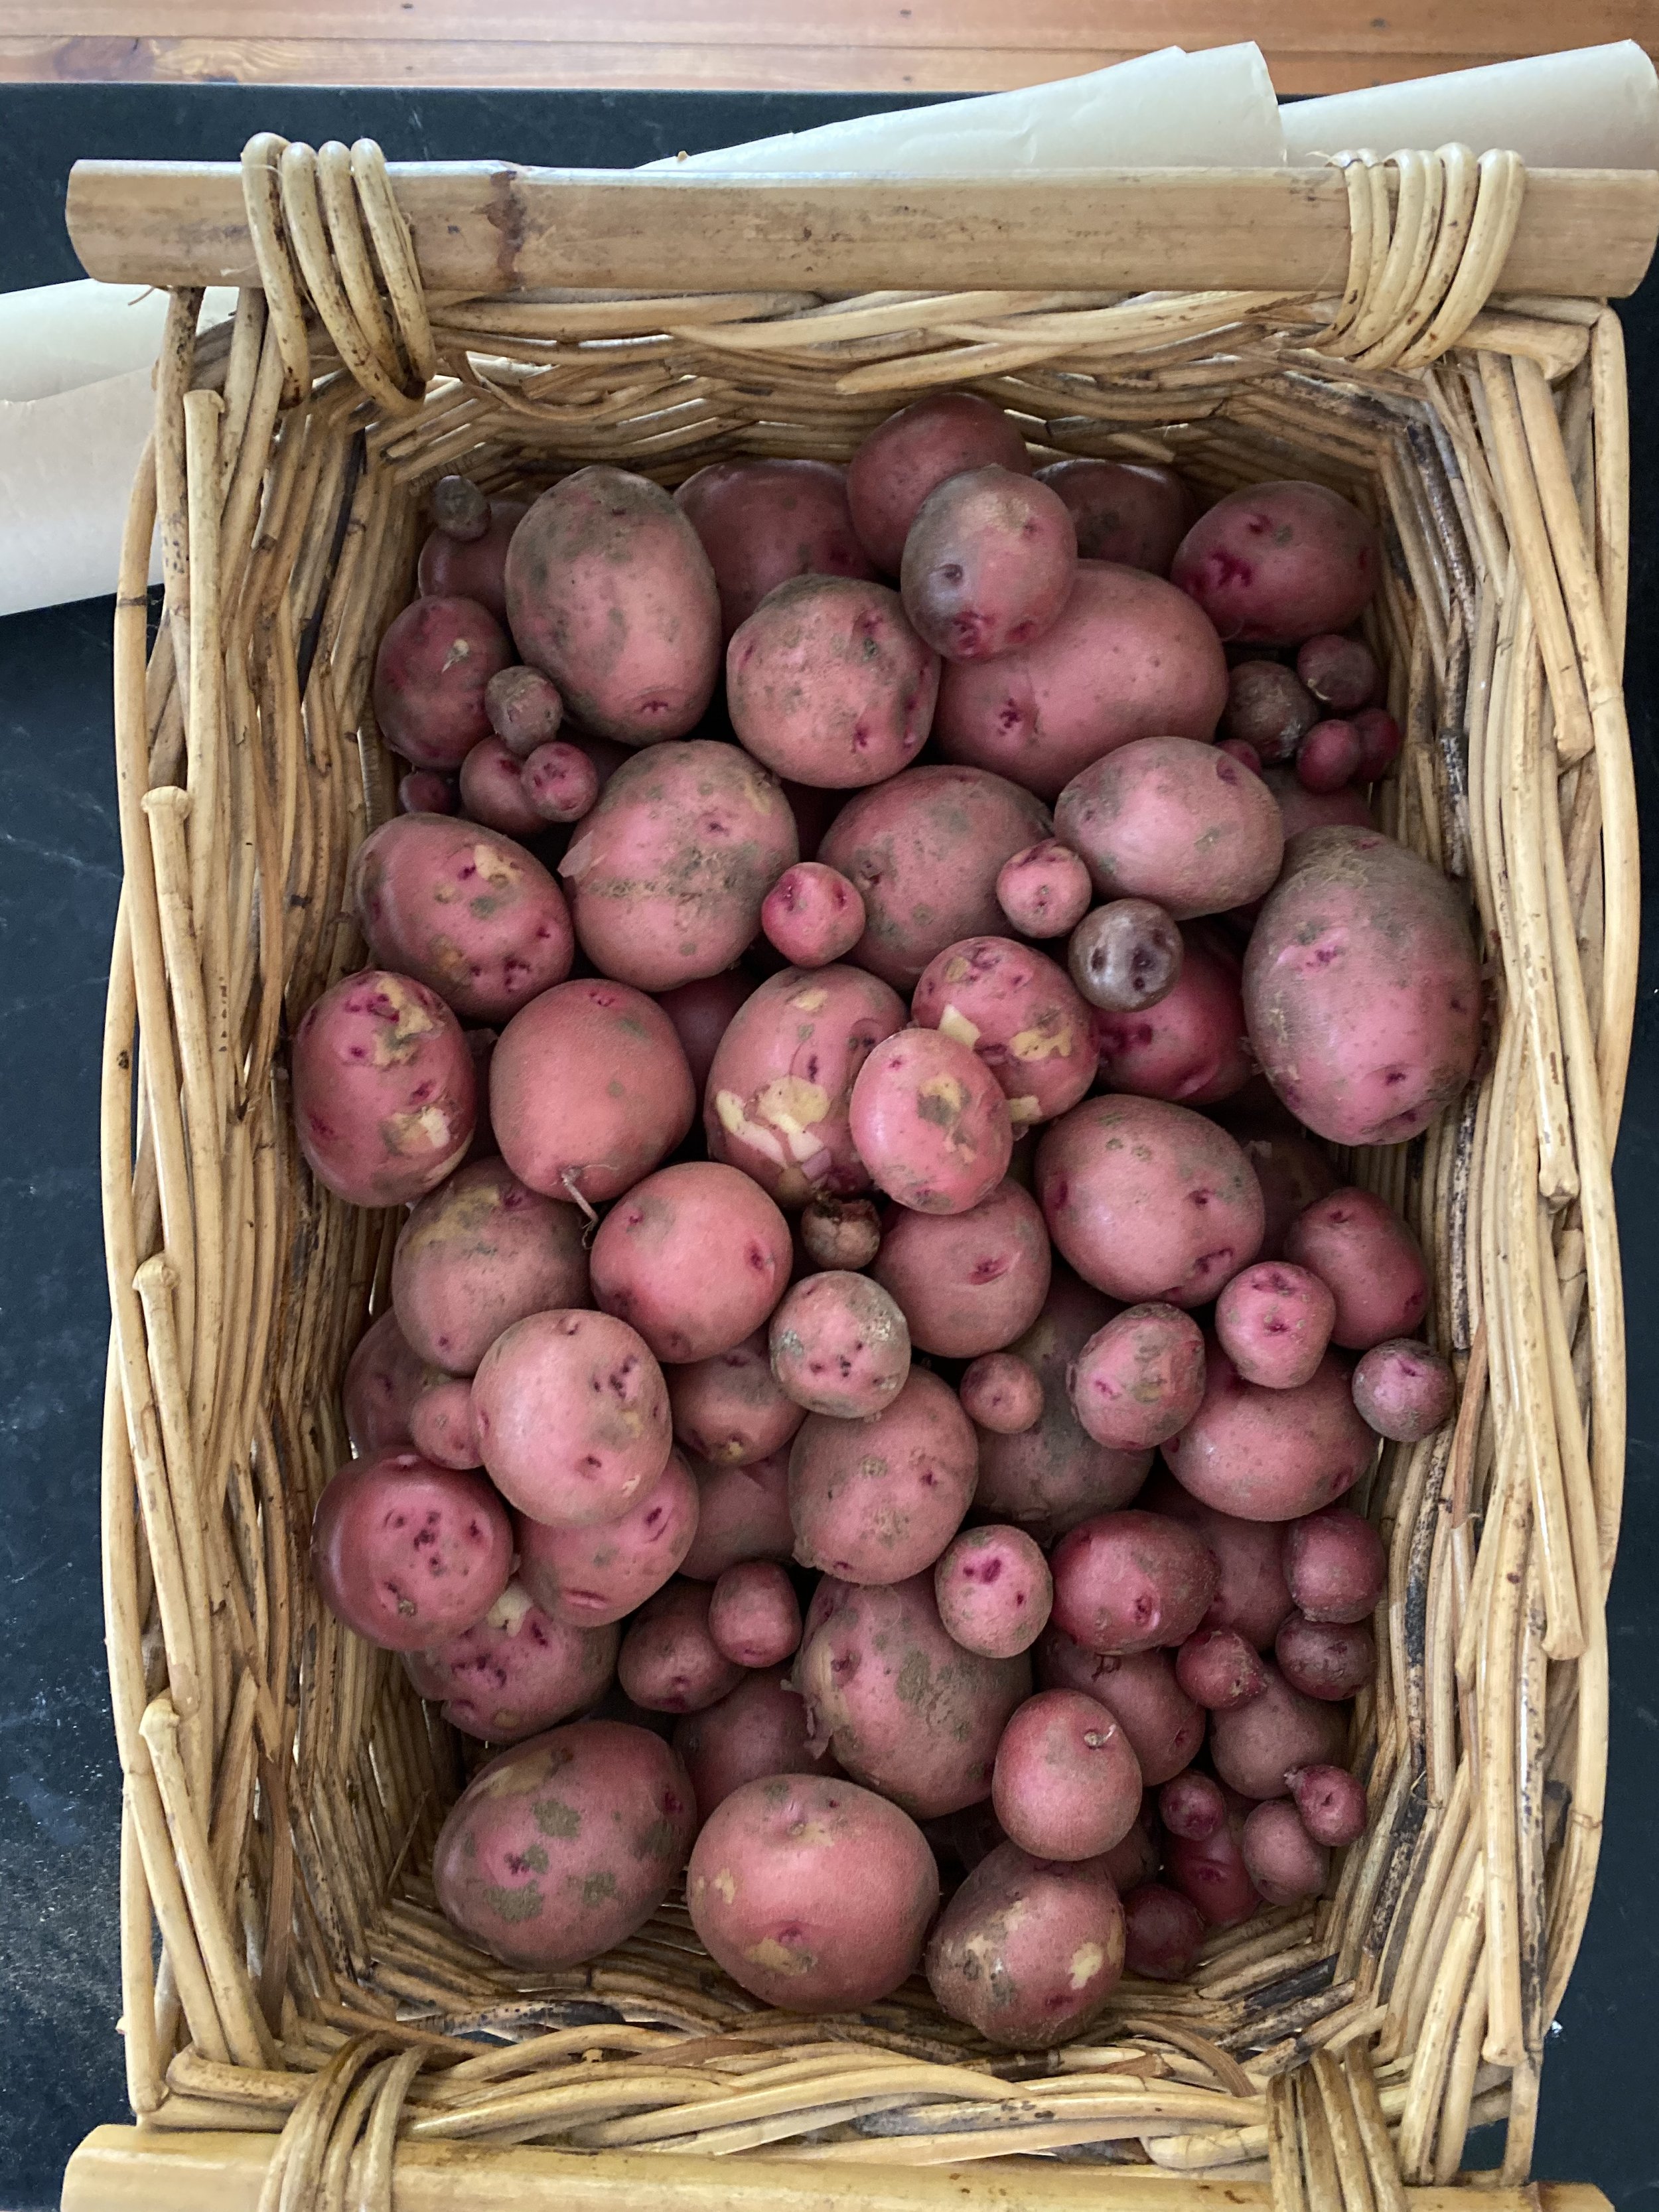 First batch of potatoes